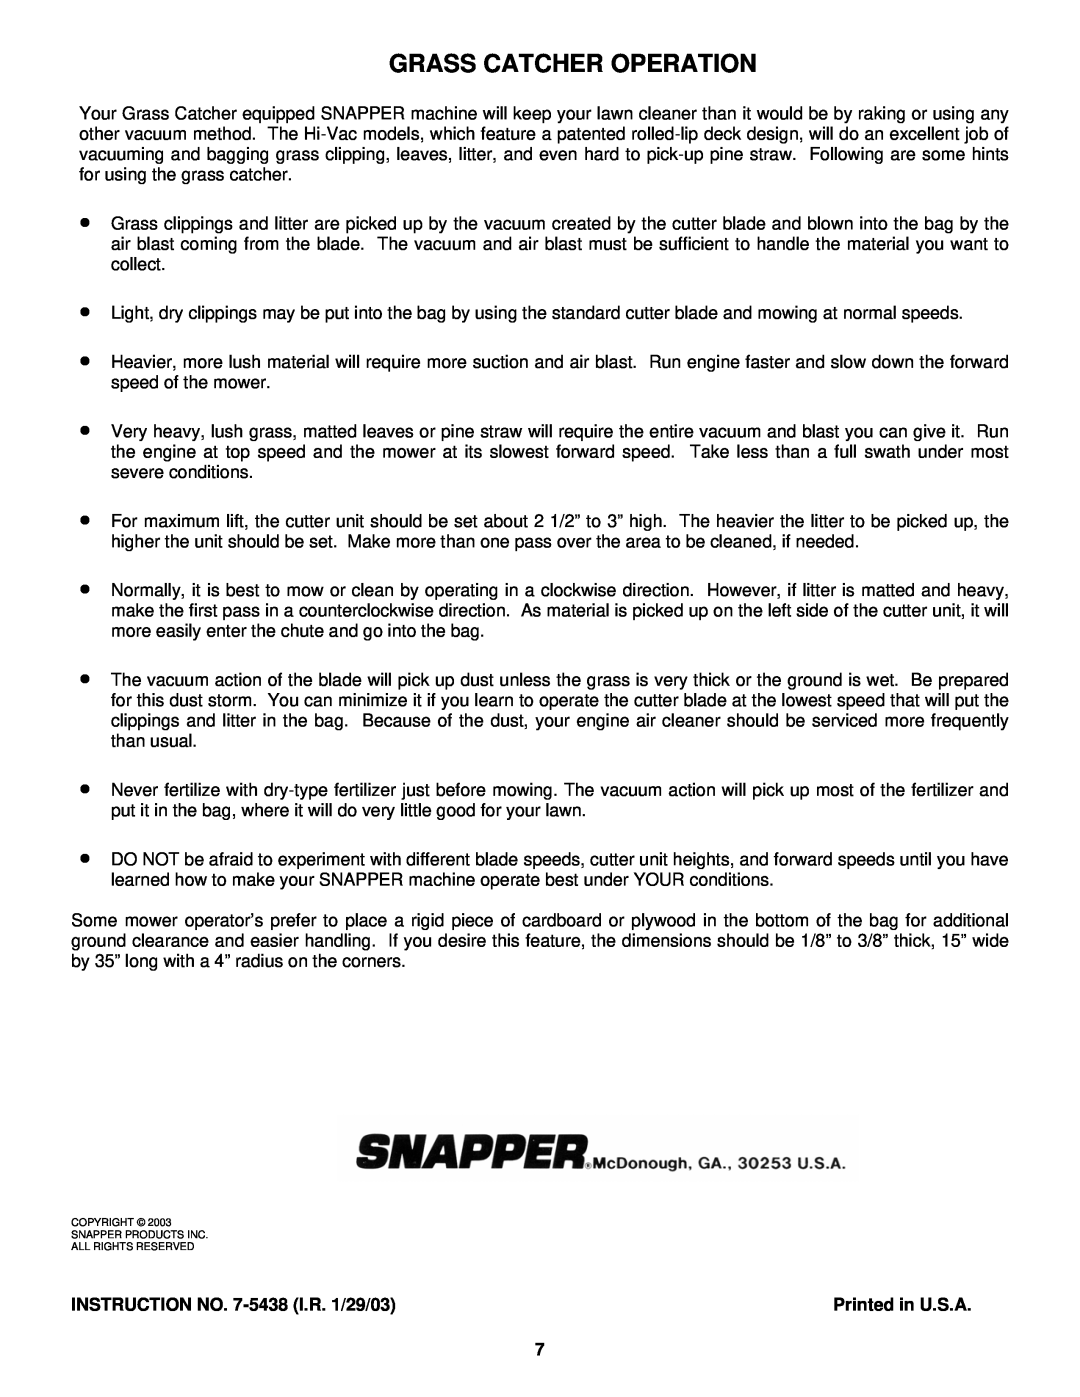 Snapper 75438 manual Grass Catcher Operation, INSTRUCTION NO. 7-5438I.R. 1/29/03 